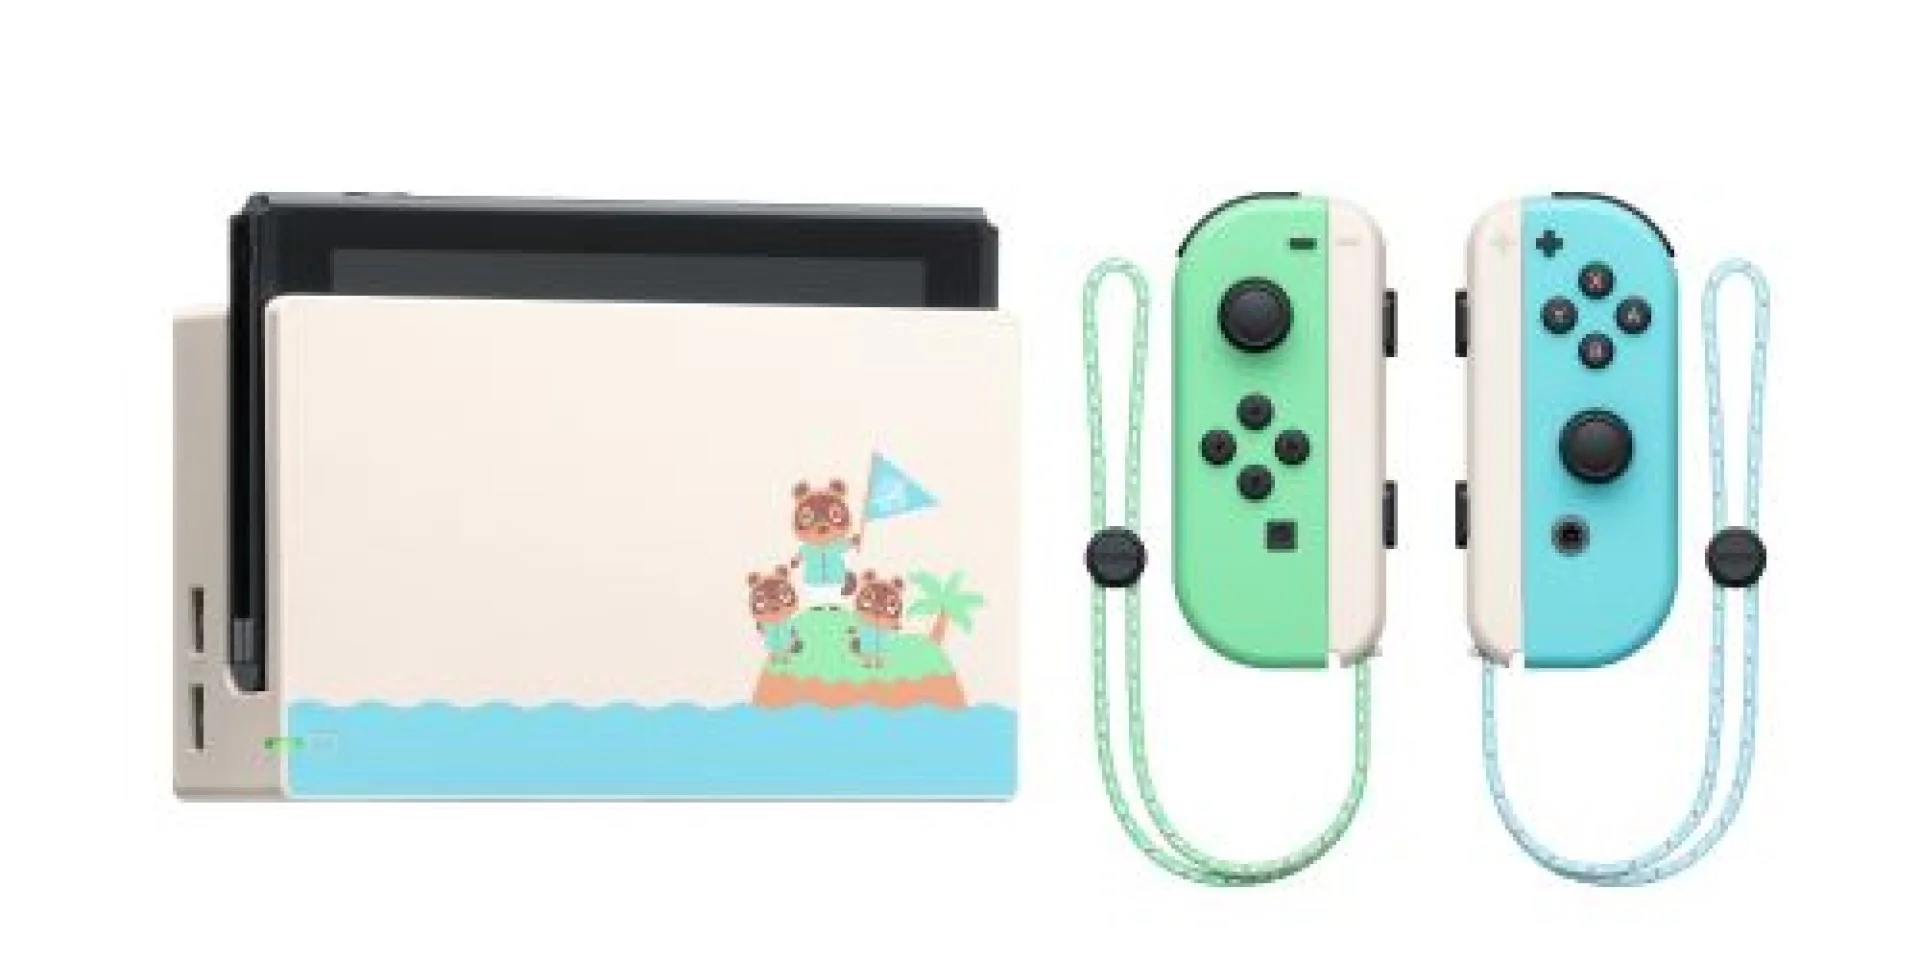  Nintendo Switch Animal Crossing New Horizons Console [FR]